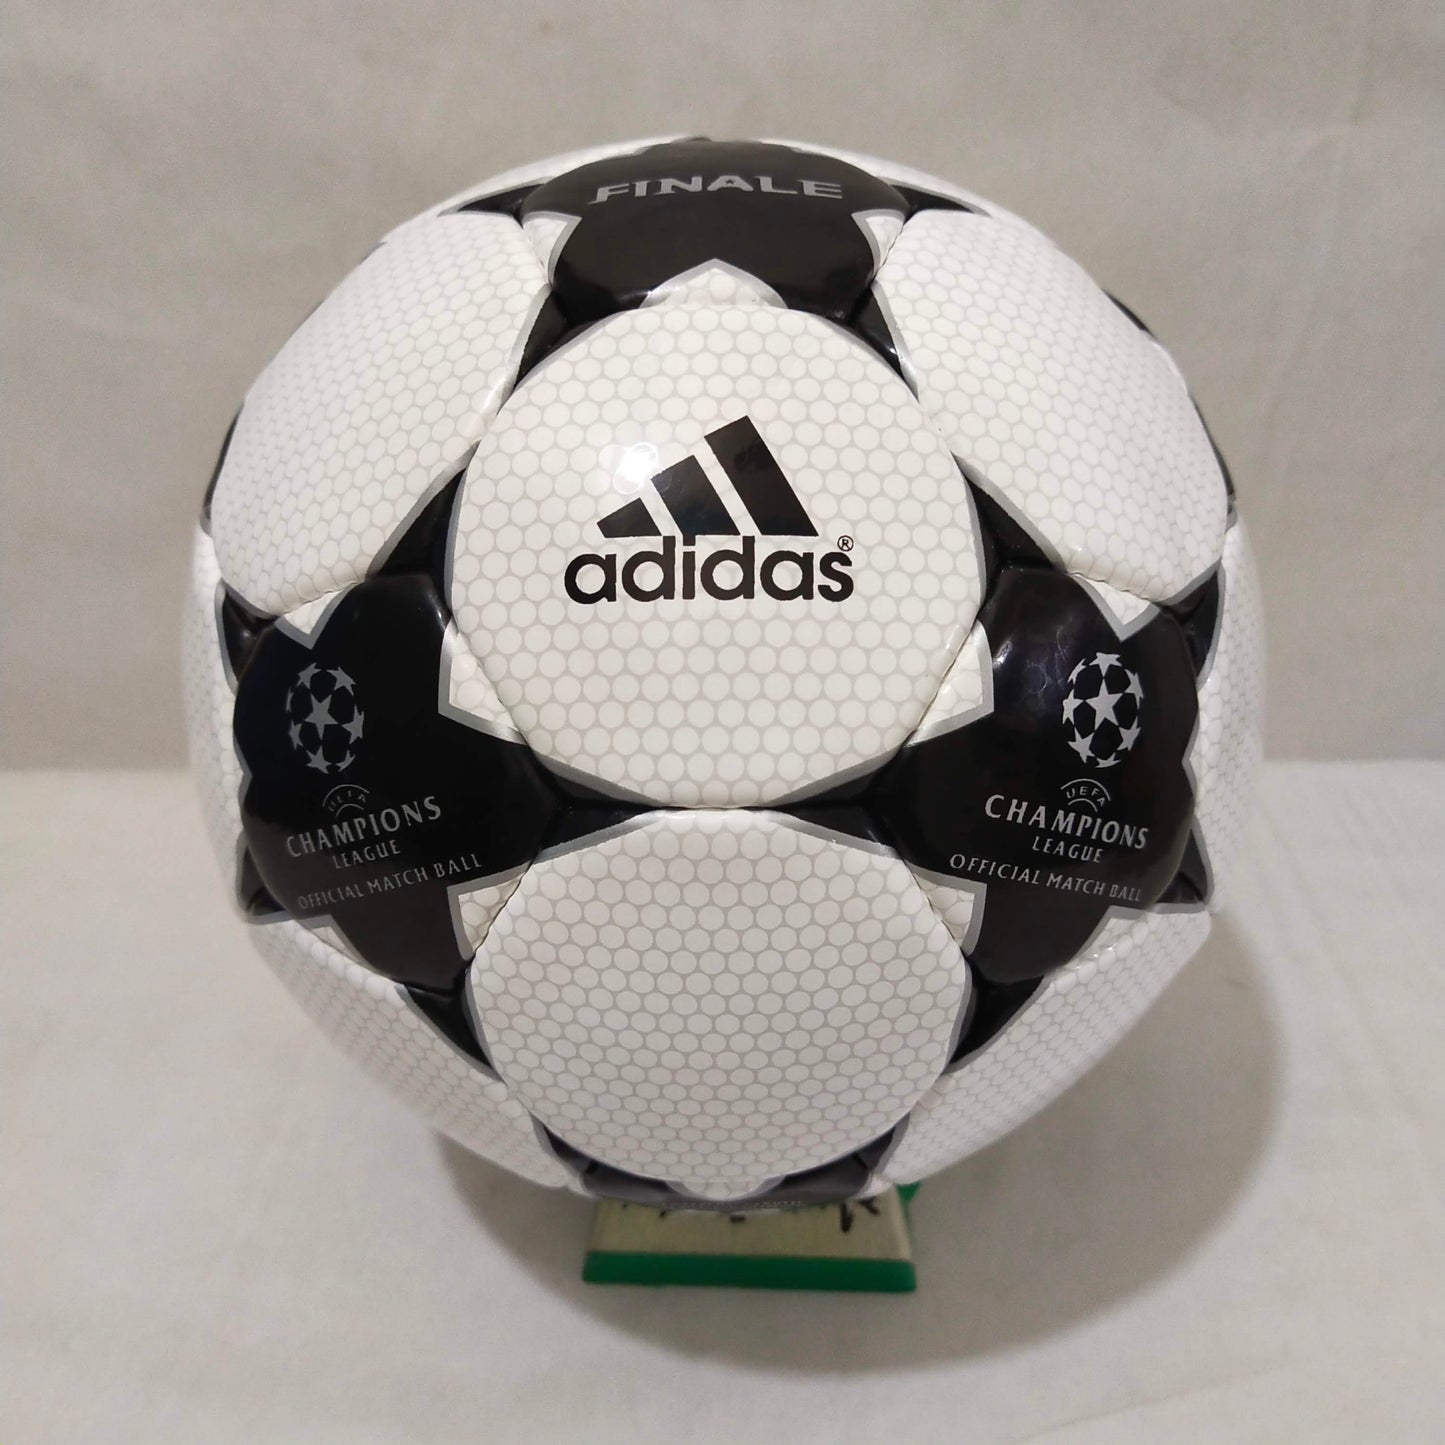 Adidas Finale 2 | 2002-2003 | UEFA Champions League Ball | Size 5 03